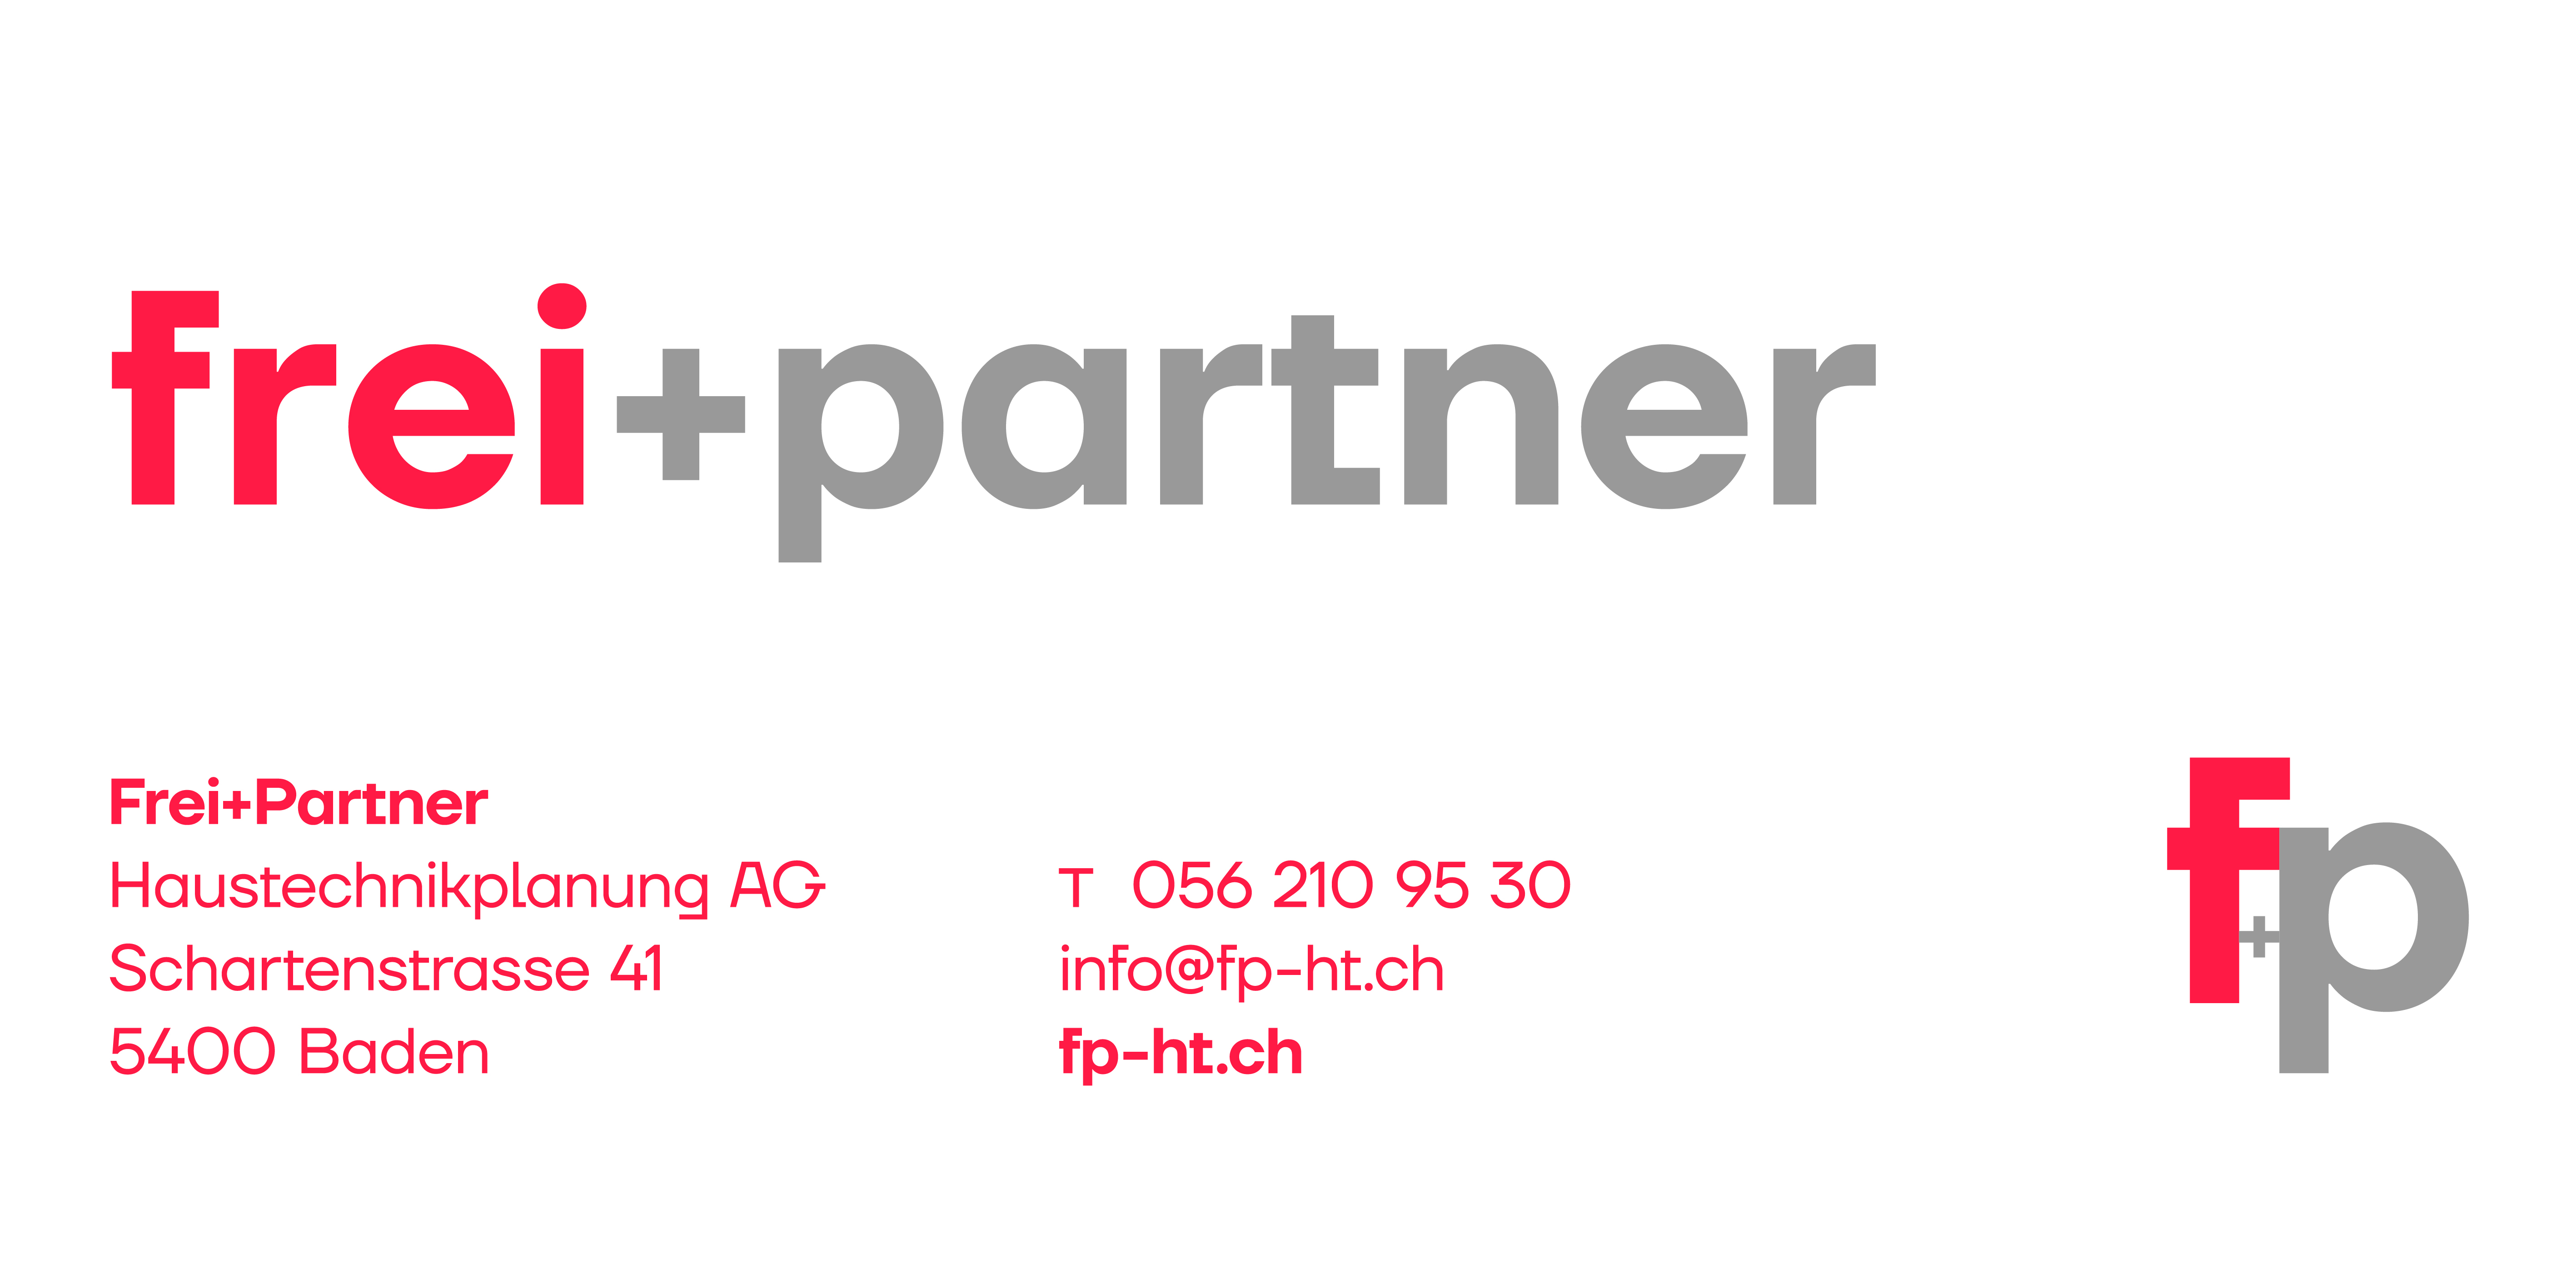 Frei+Partner Haustechnikplanung AG